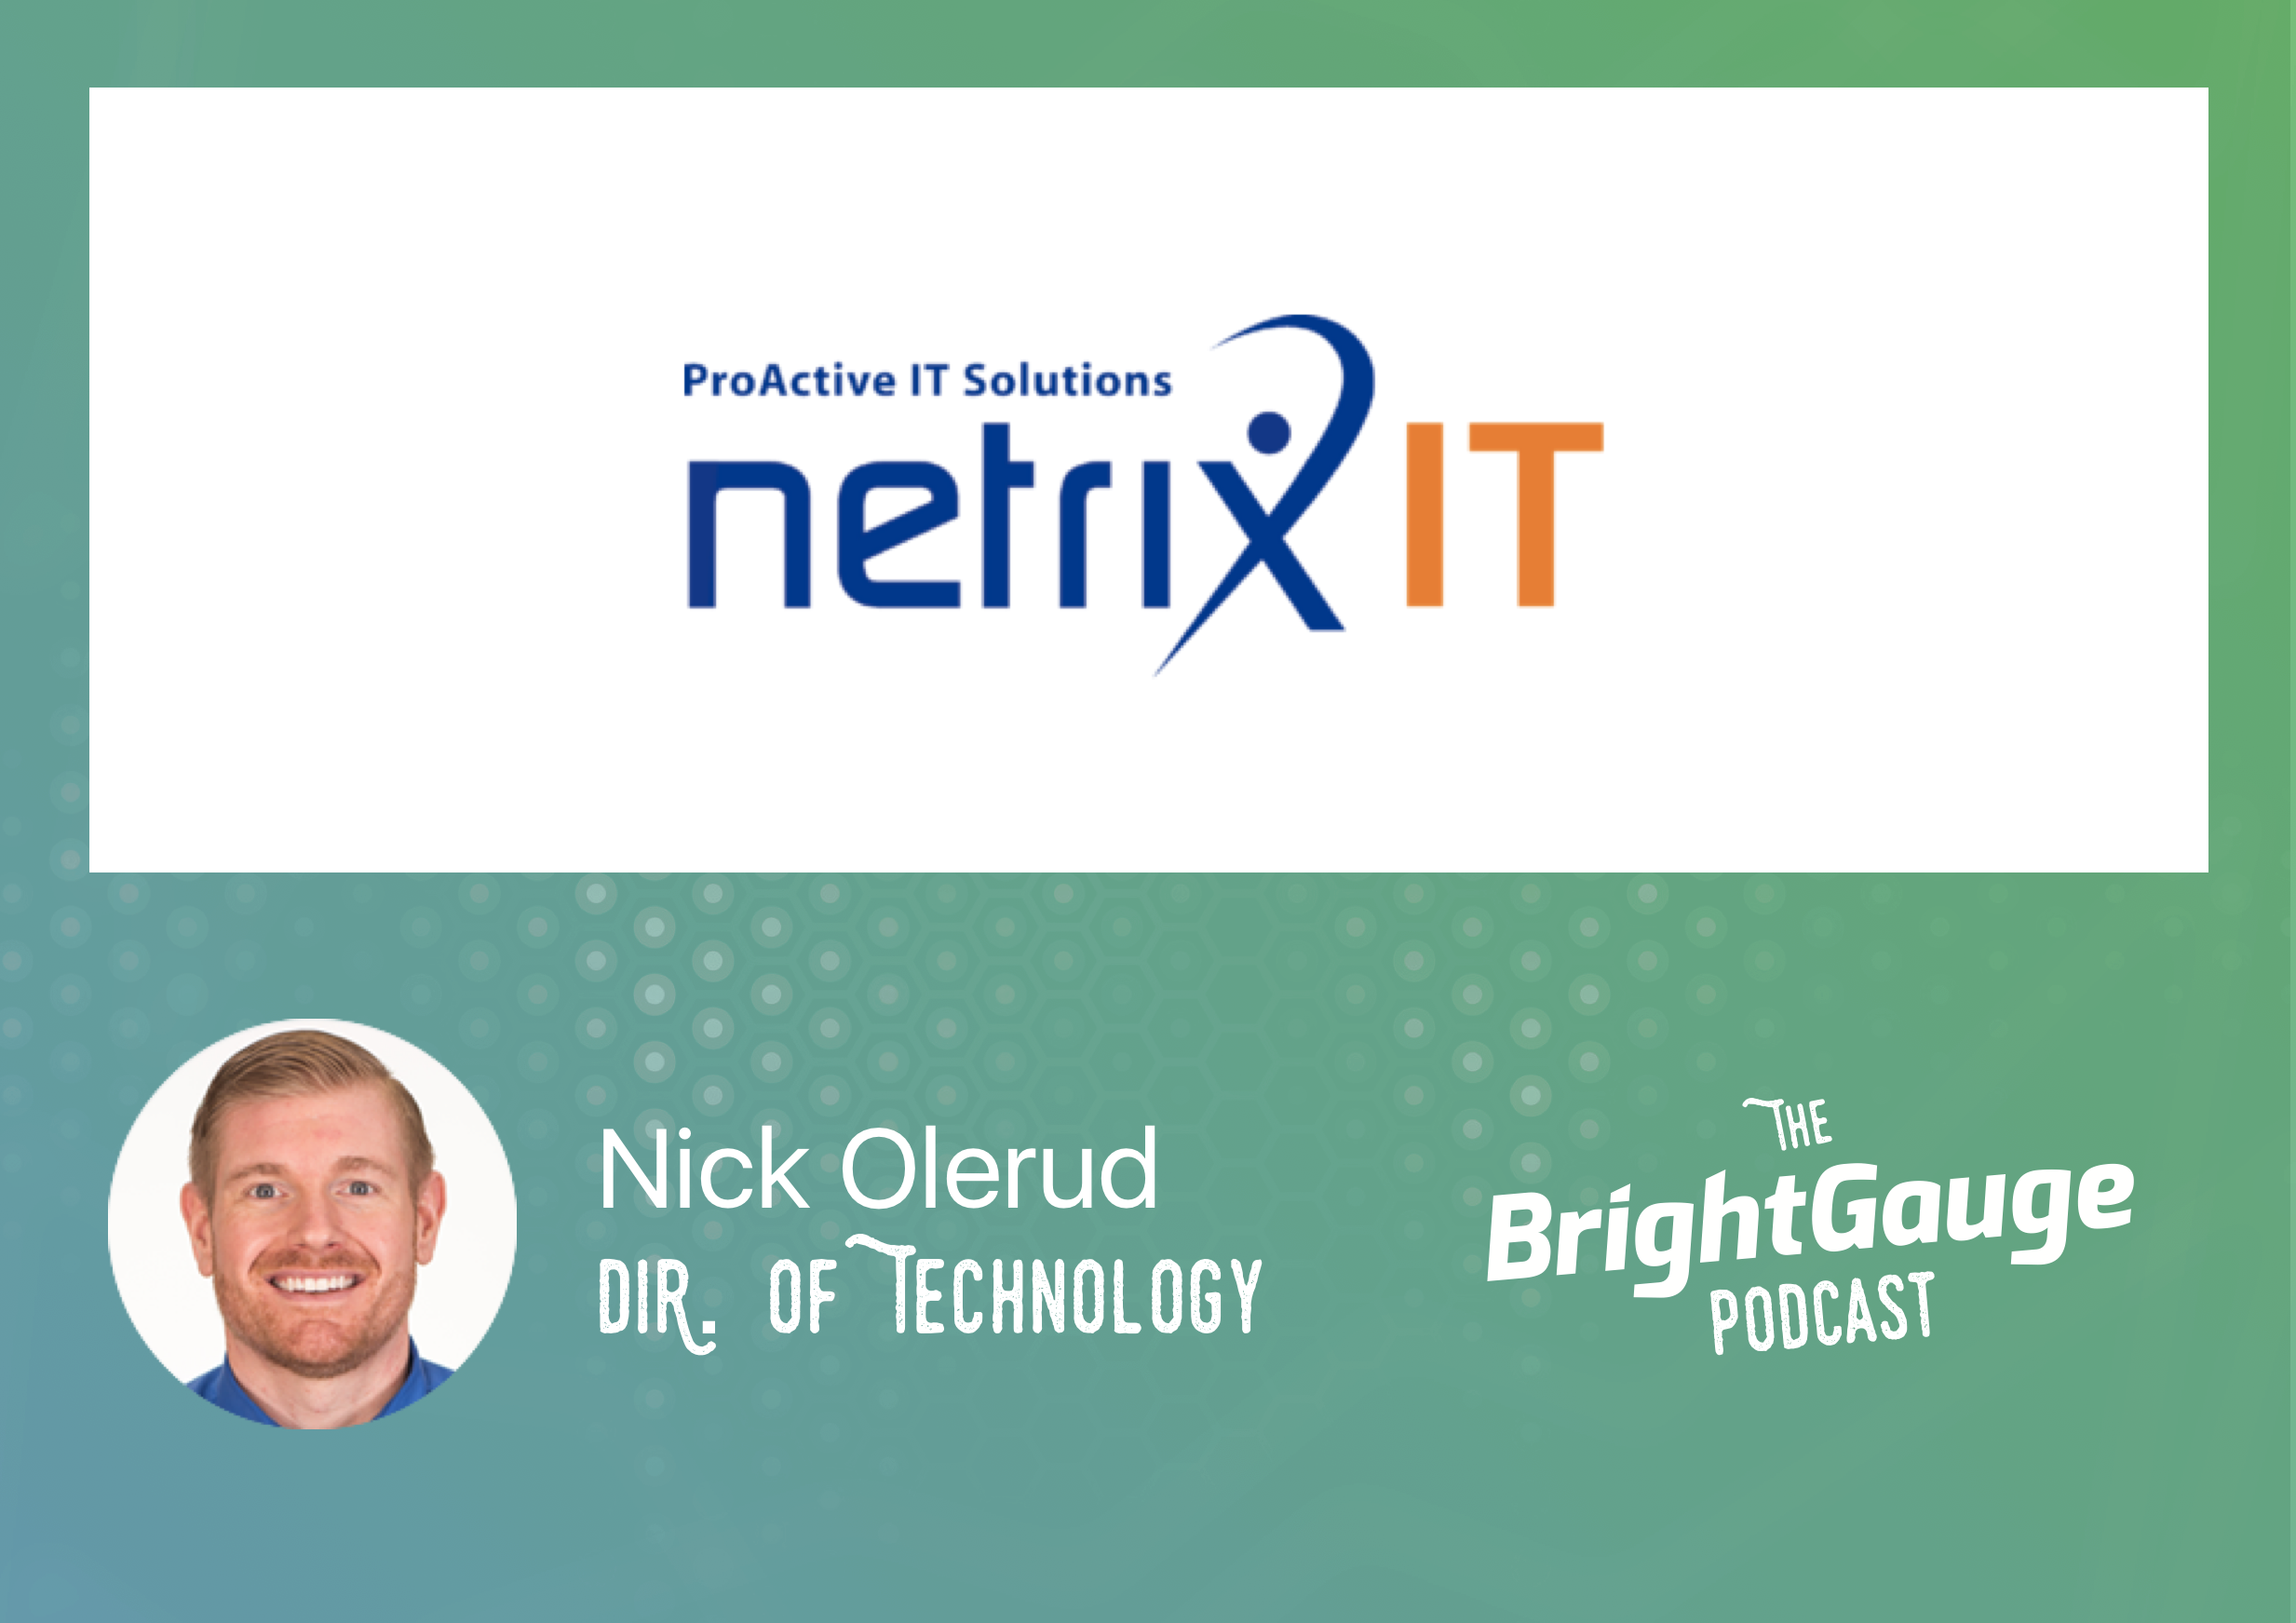 [Podcast] Episode 10 with Nick Olerud of Netrix IT